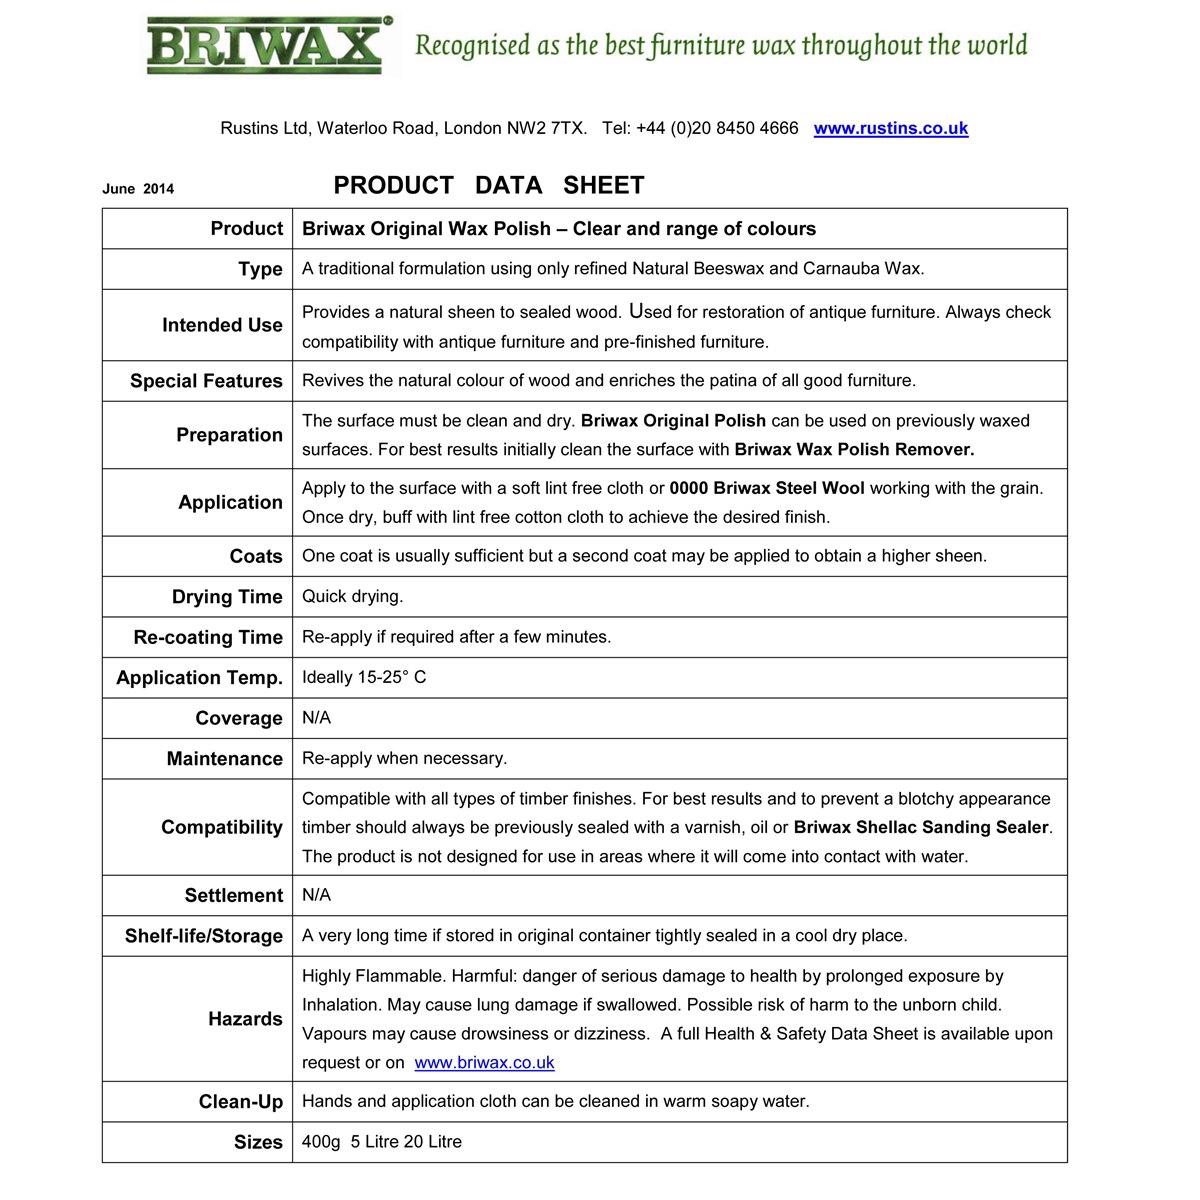 Briwax Furniture Wax usage instructions